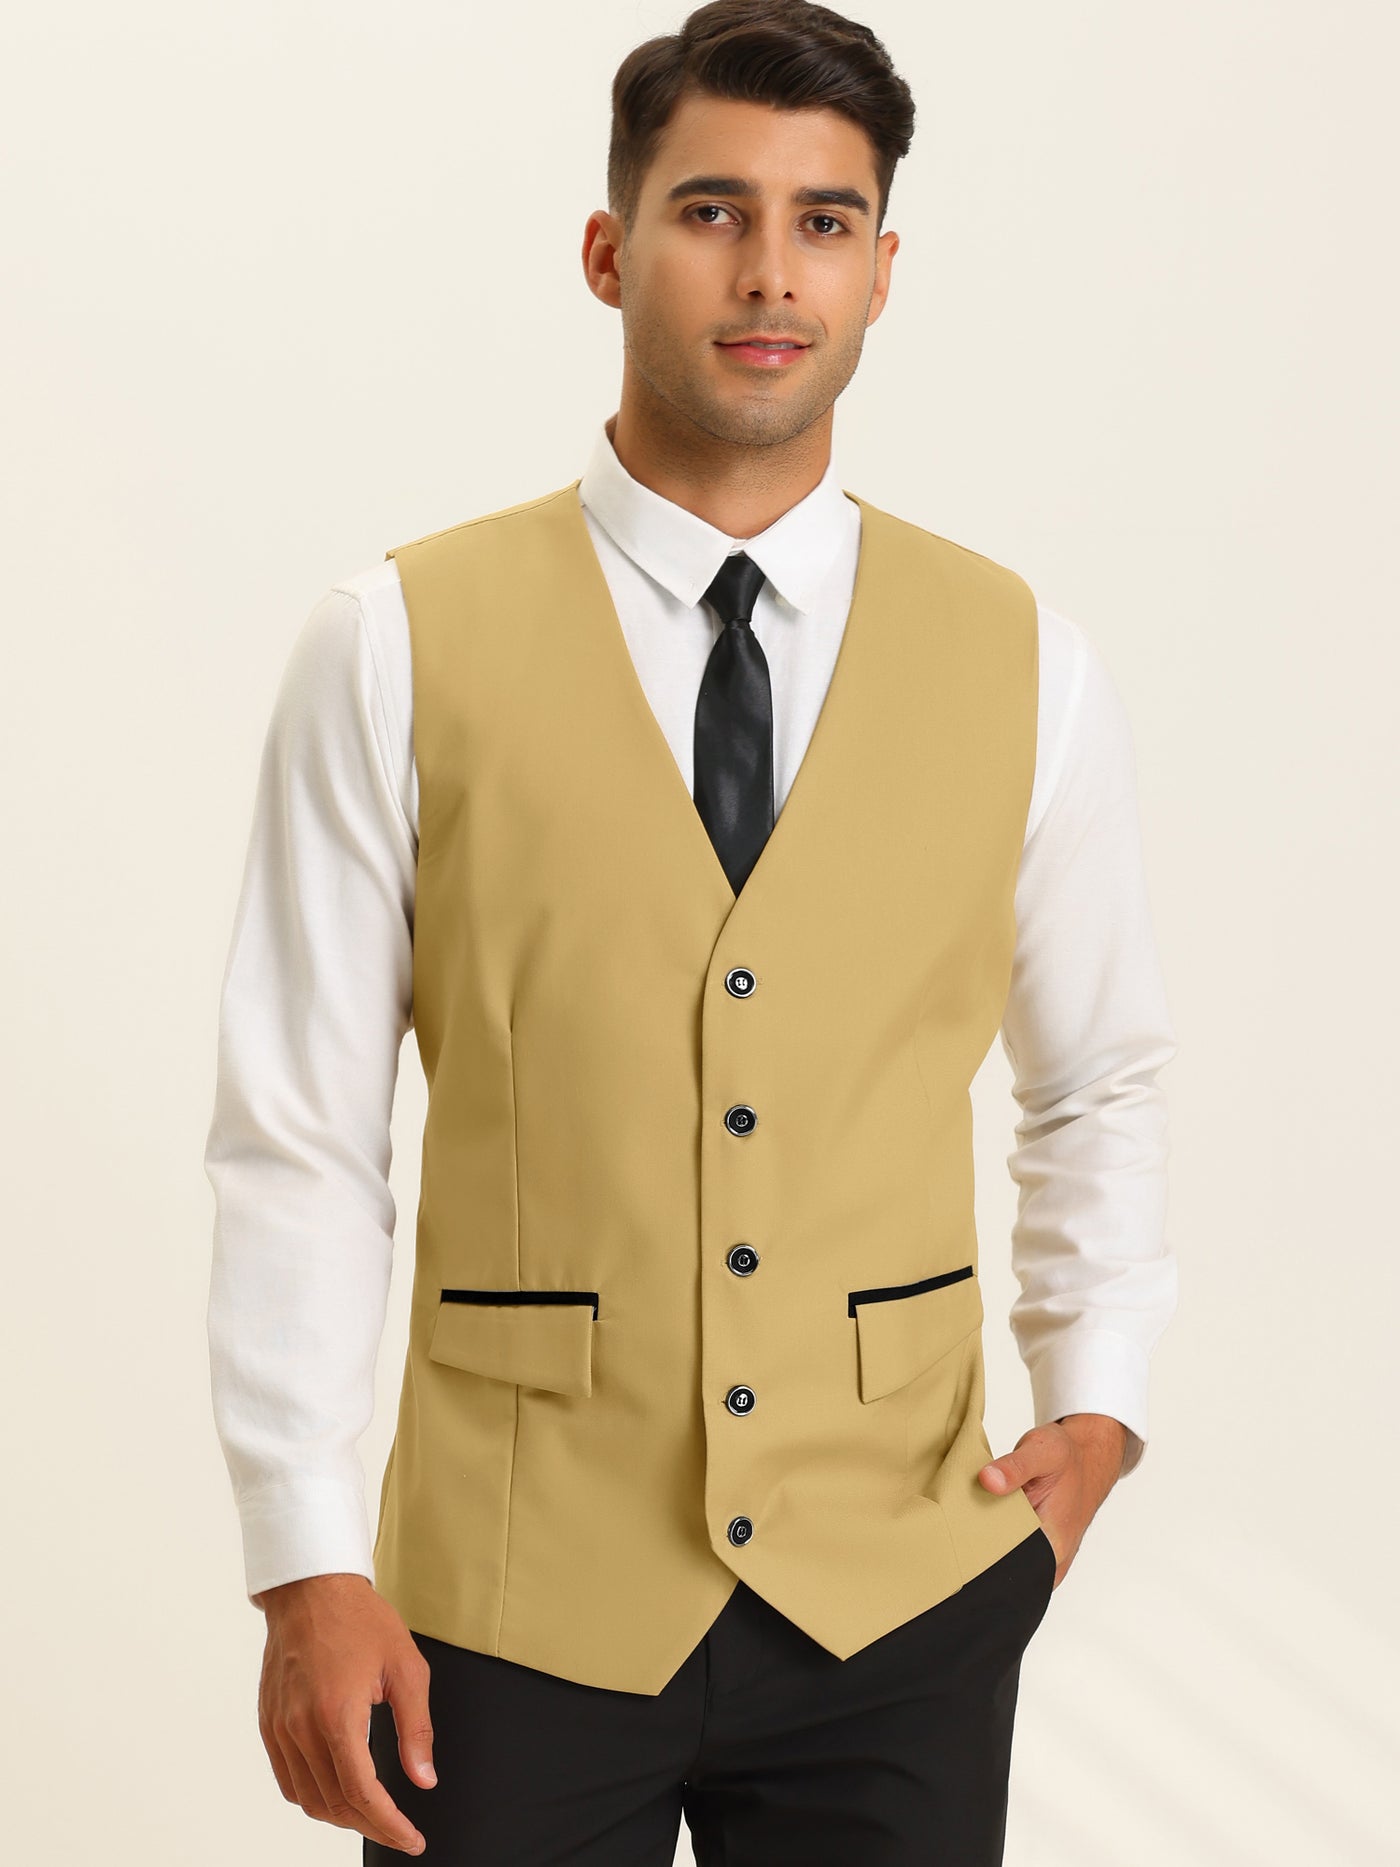 Bublédon Men's Slim Fit V-Neck Sleeveless Dress Vest Wedding Waistcoat